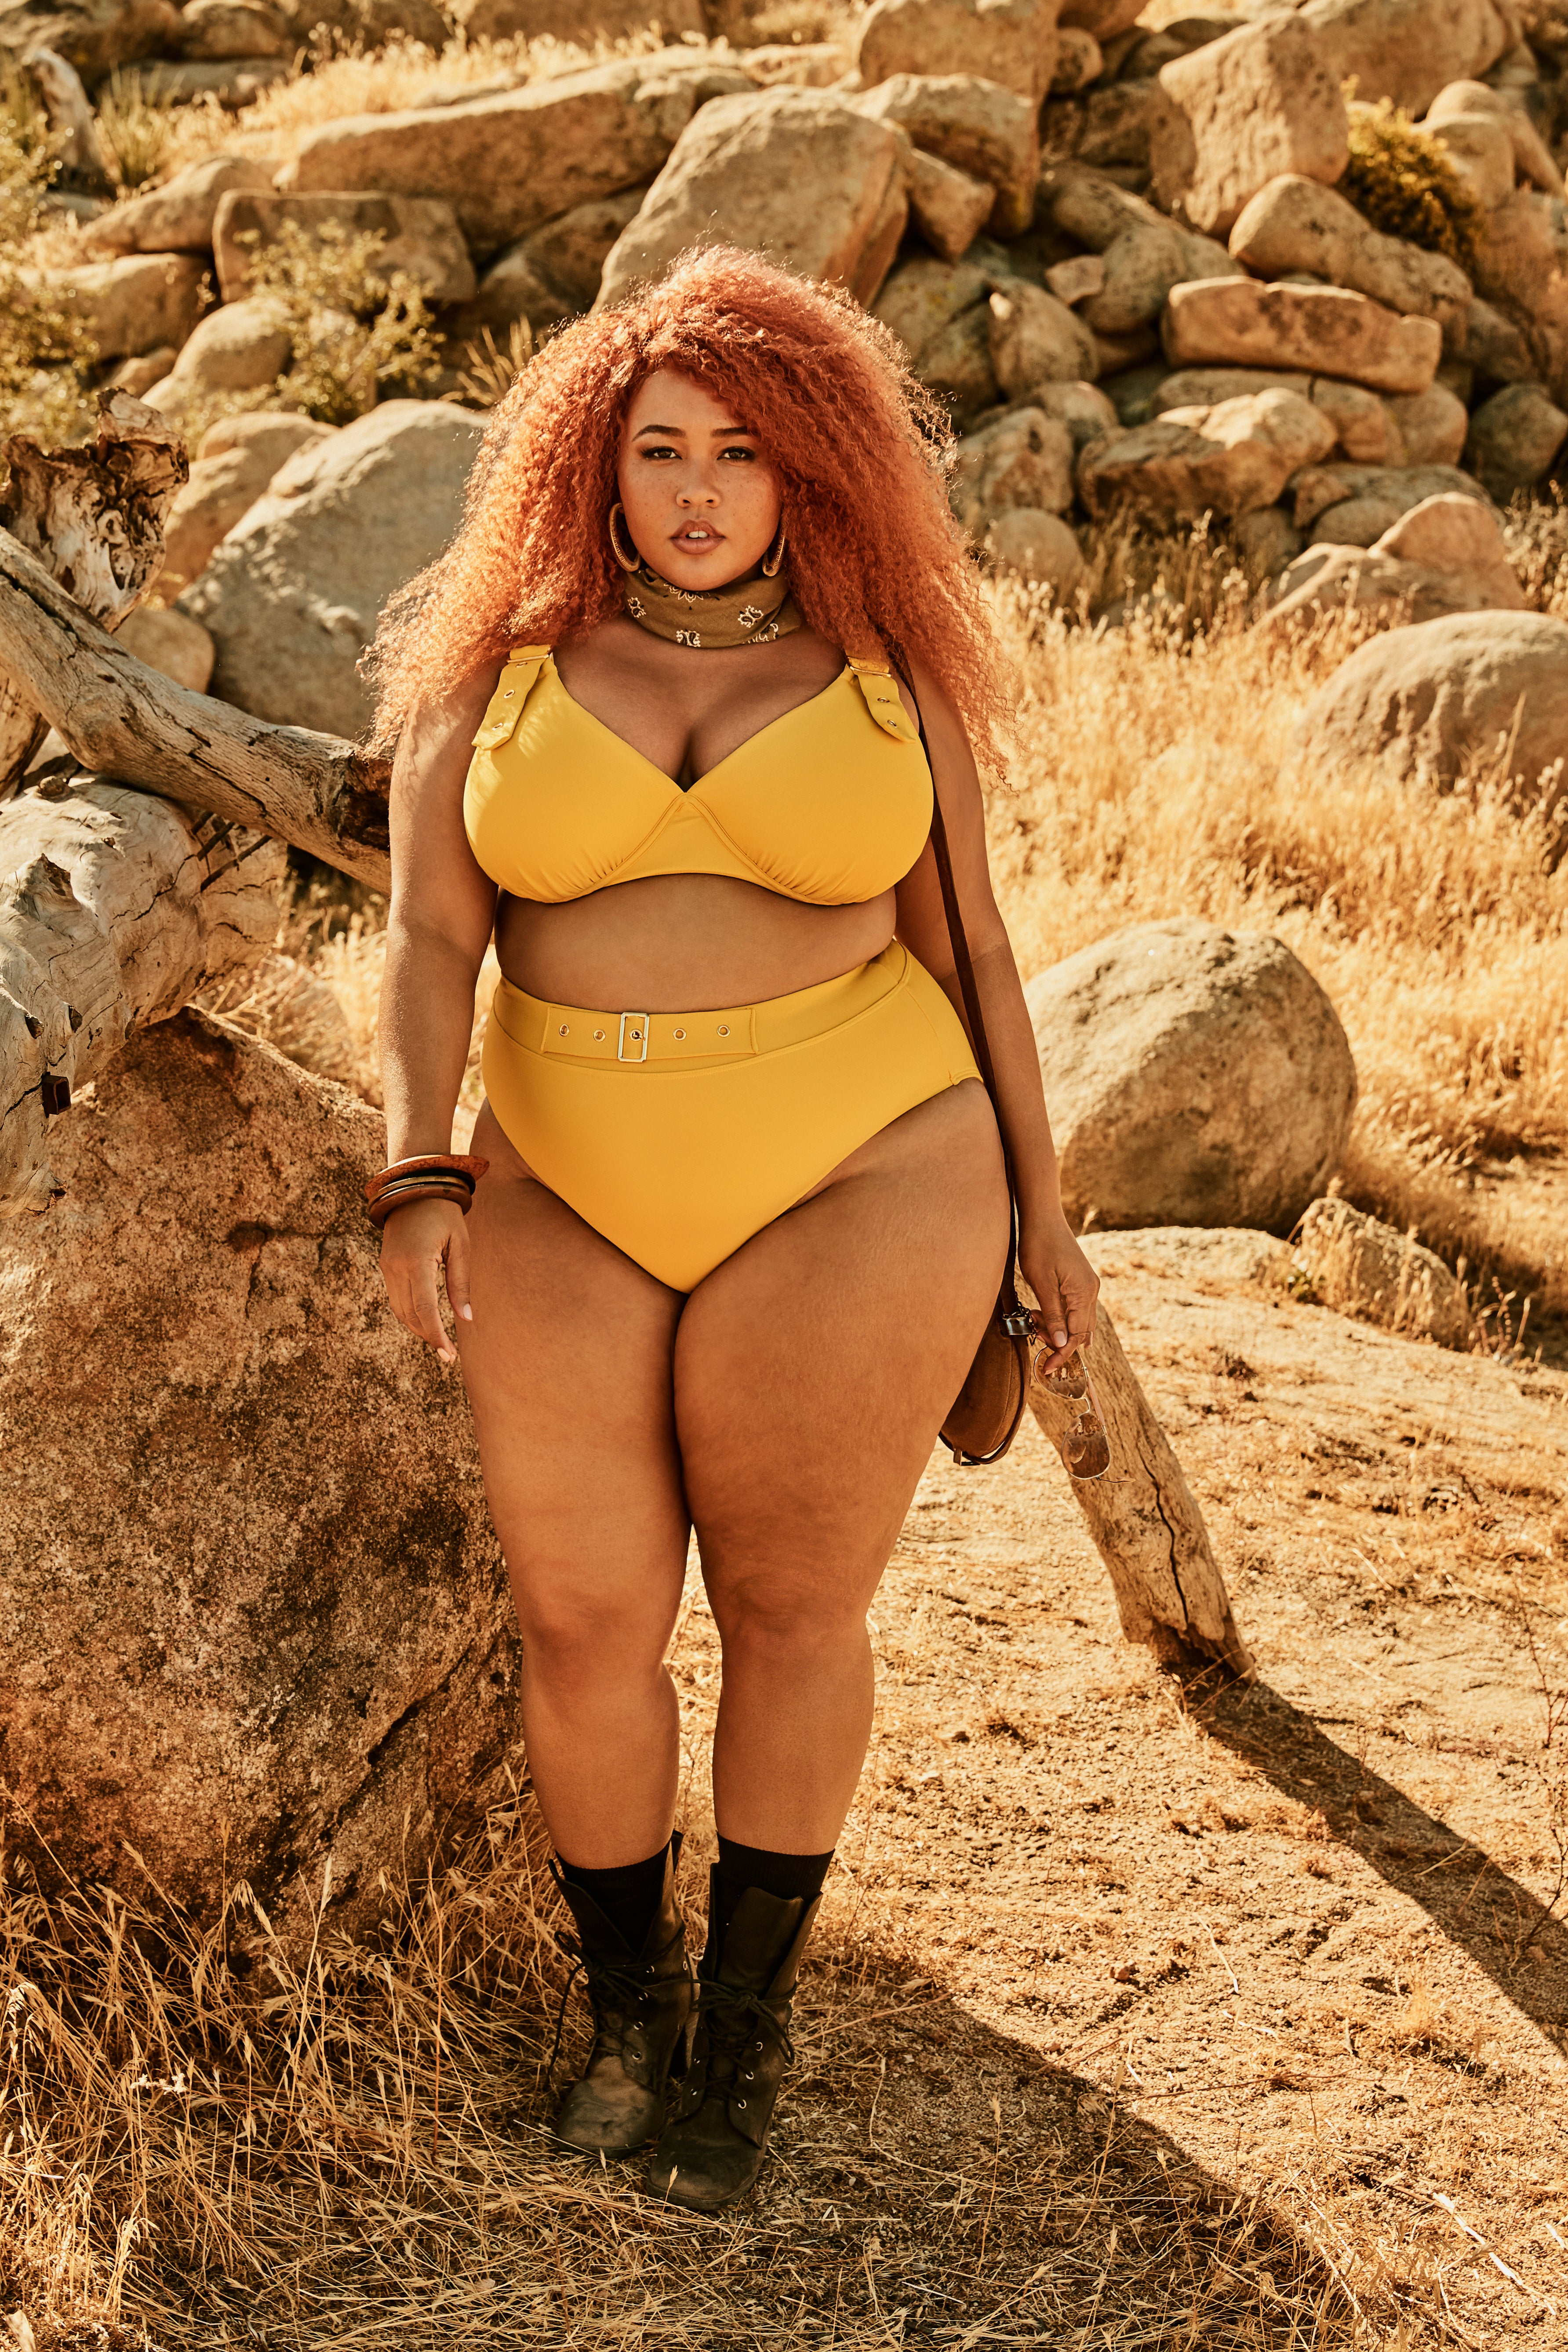 Gabi Gregg of GabiFresh Launches New Bikini with swimsuitsforall.com